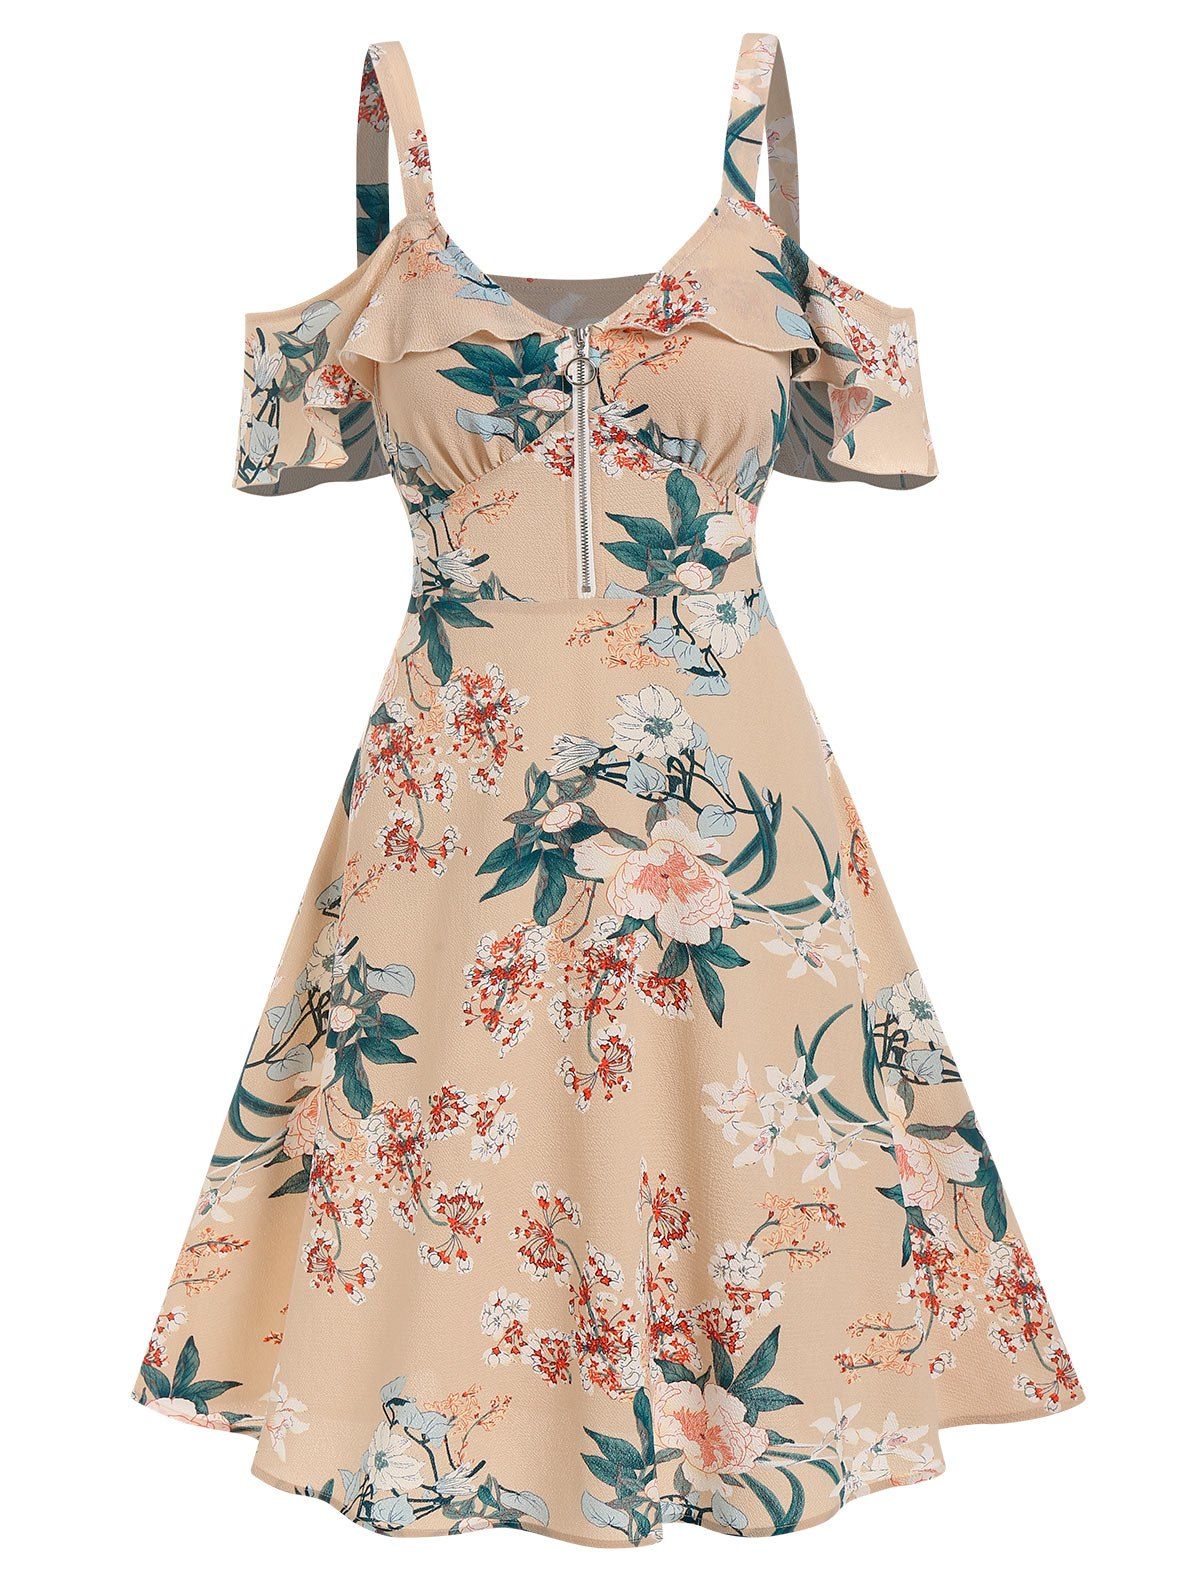 Cold Shoulder Sundress Ruffled Floral Print Dress - LIGHT YELLOW L